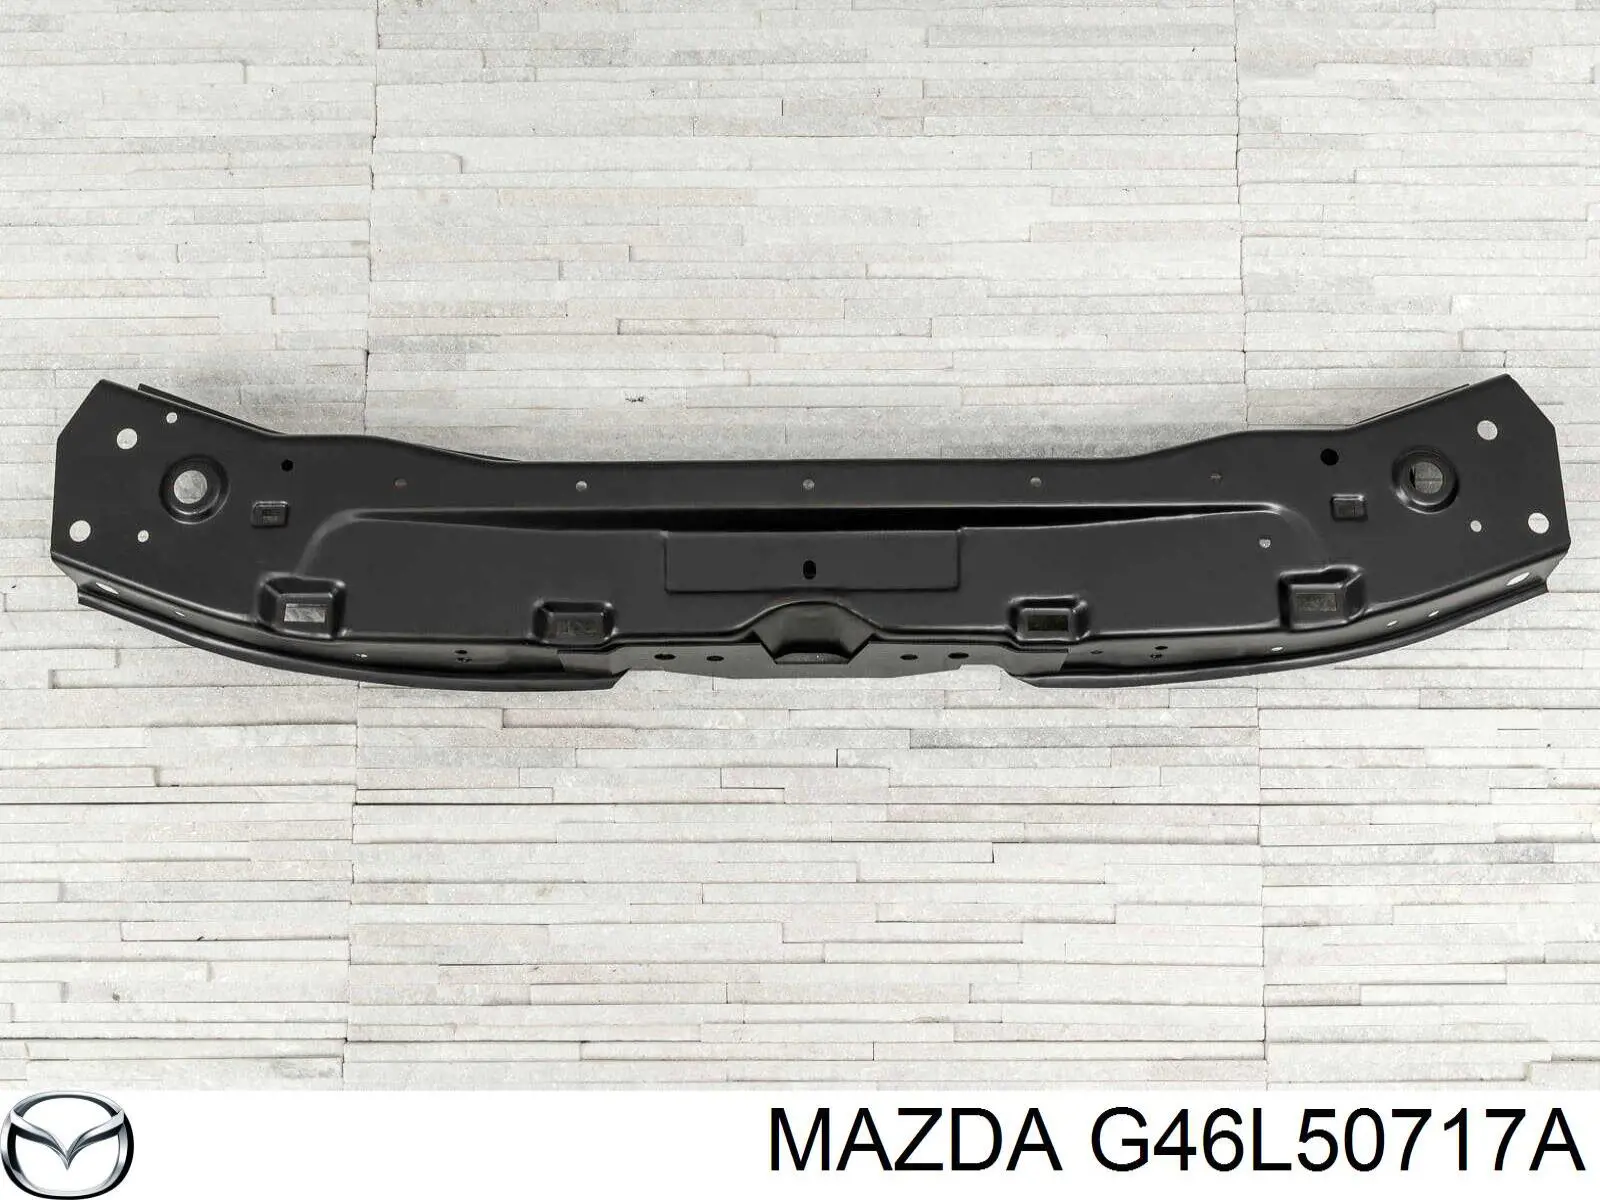 G46L50717A Mazda ajuste panel frontal (calibrador de radiador Superior)